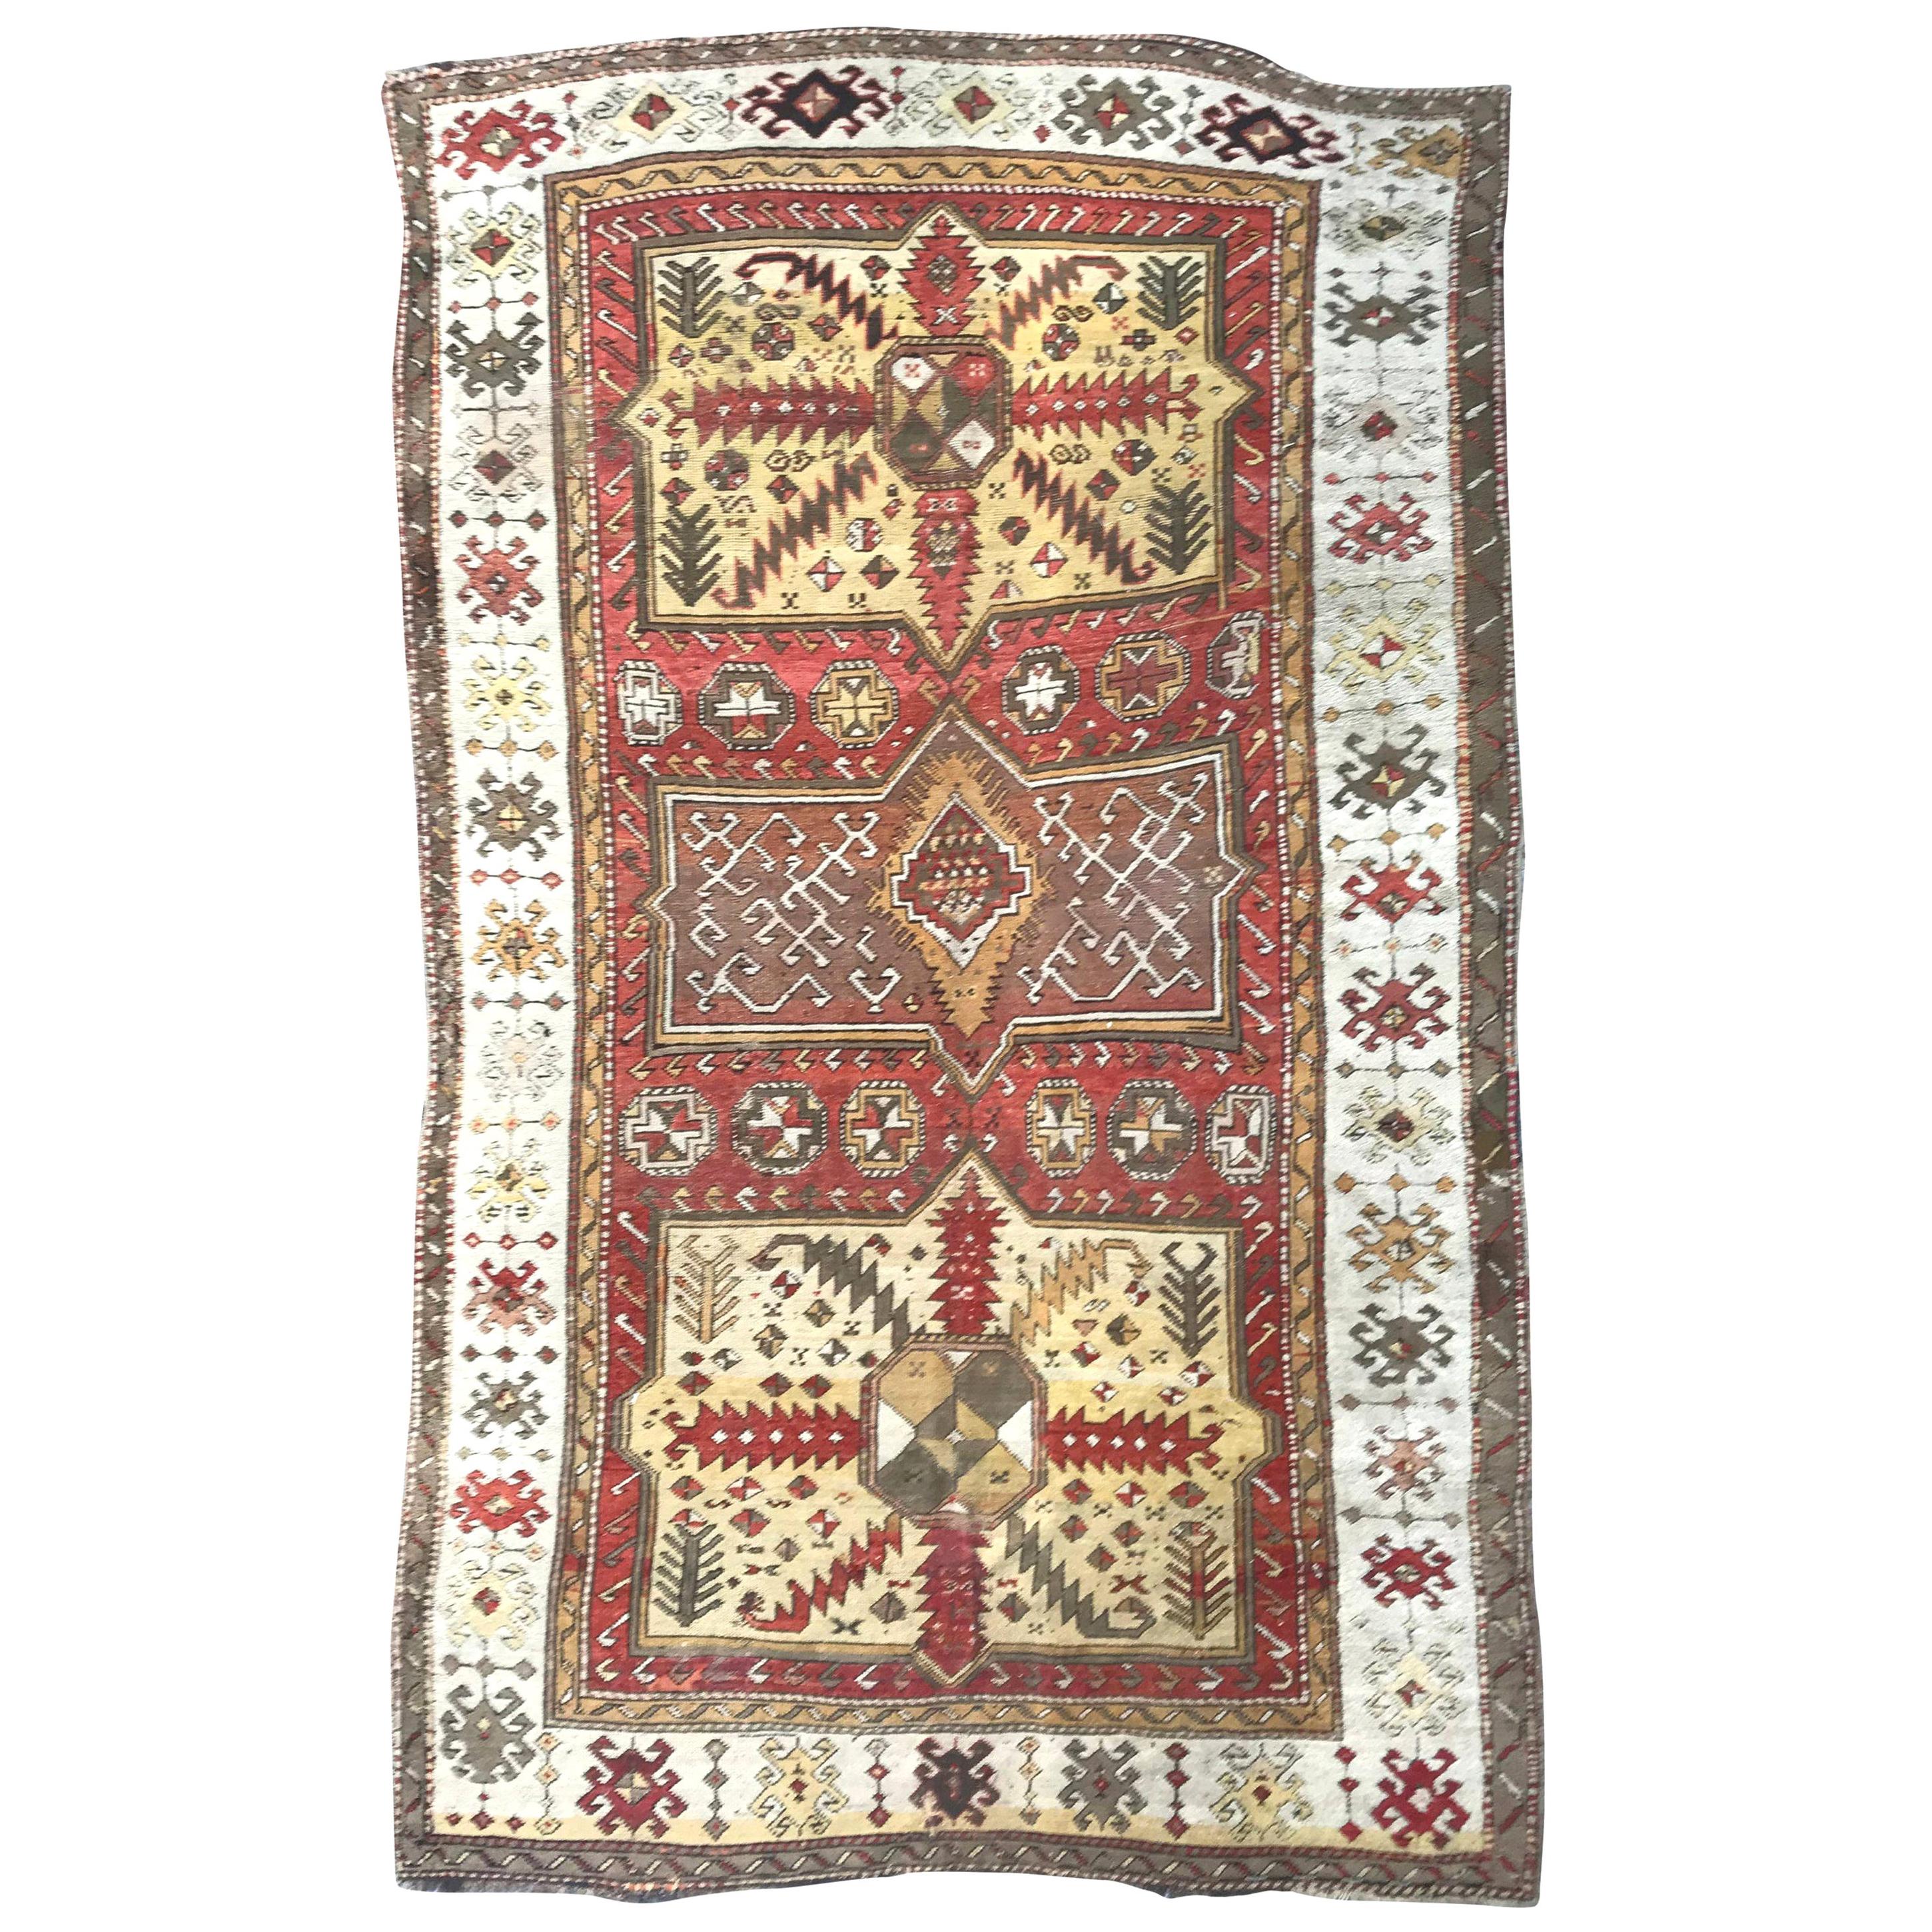 Wonderful Antique Kazak Design Turkish Rug